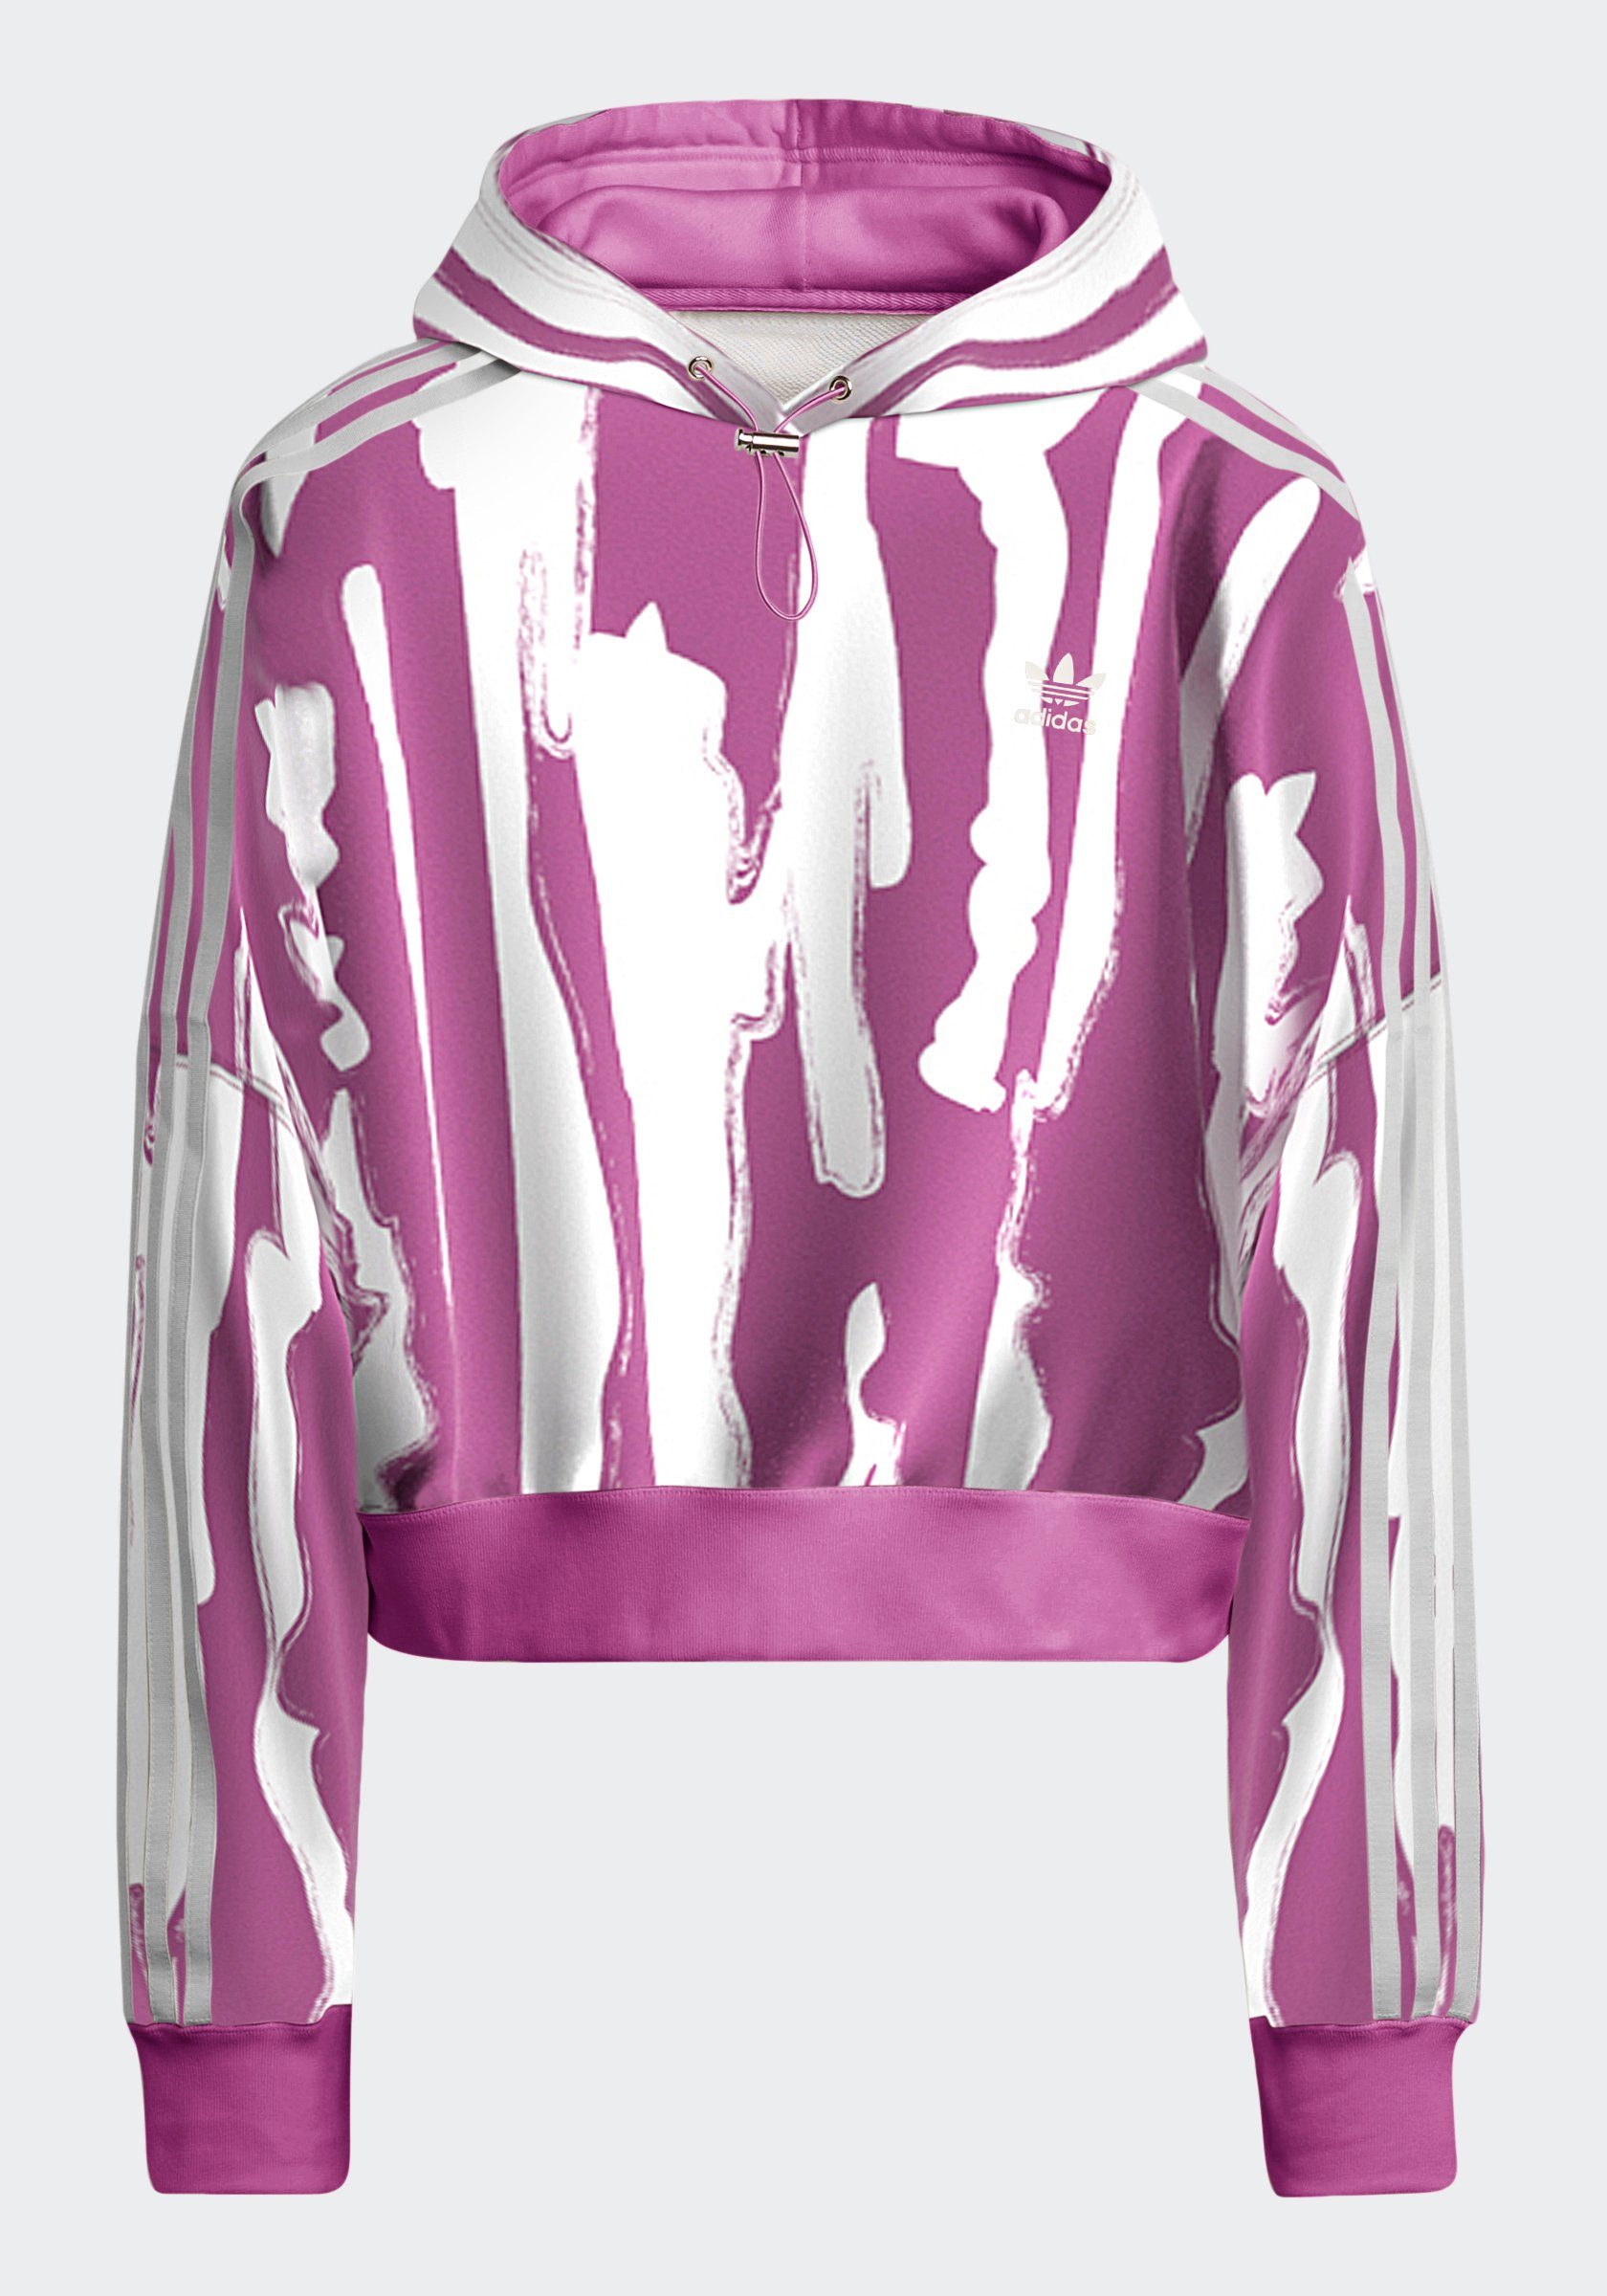 HOODIE Sweatshirt adidas SEPULI/WHITE Originals